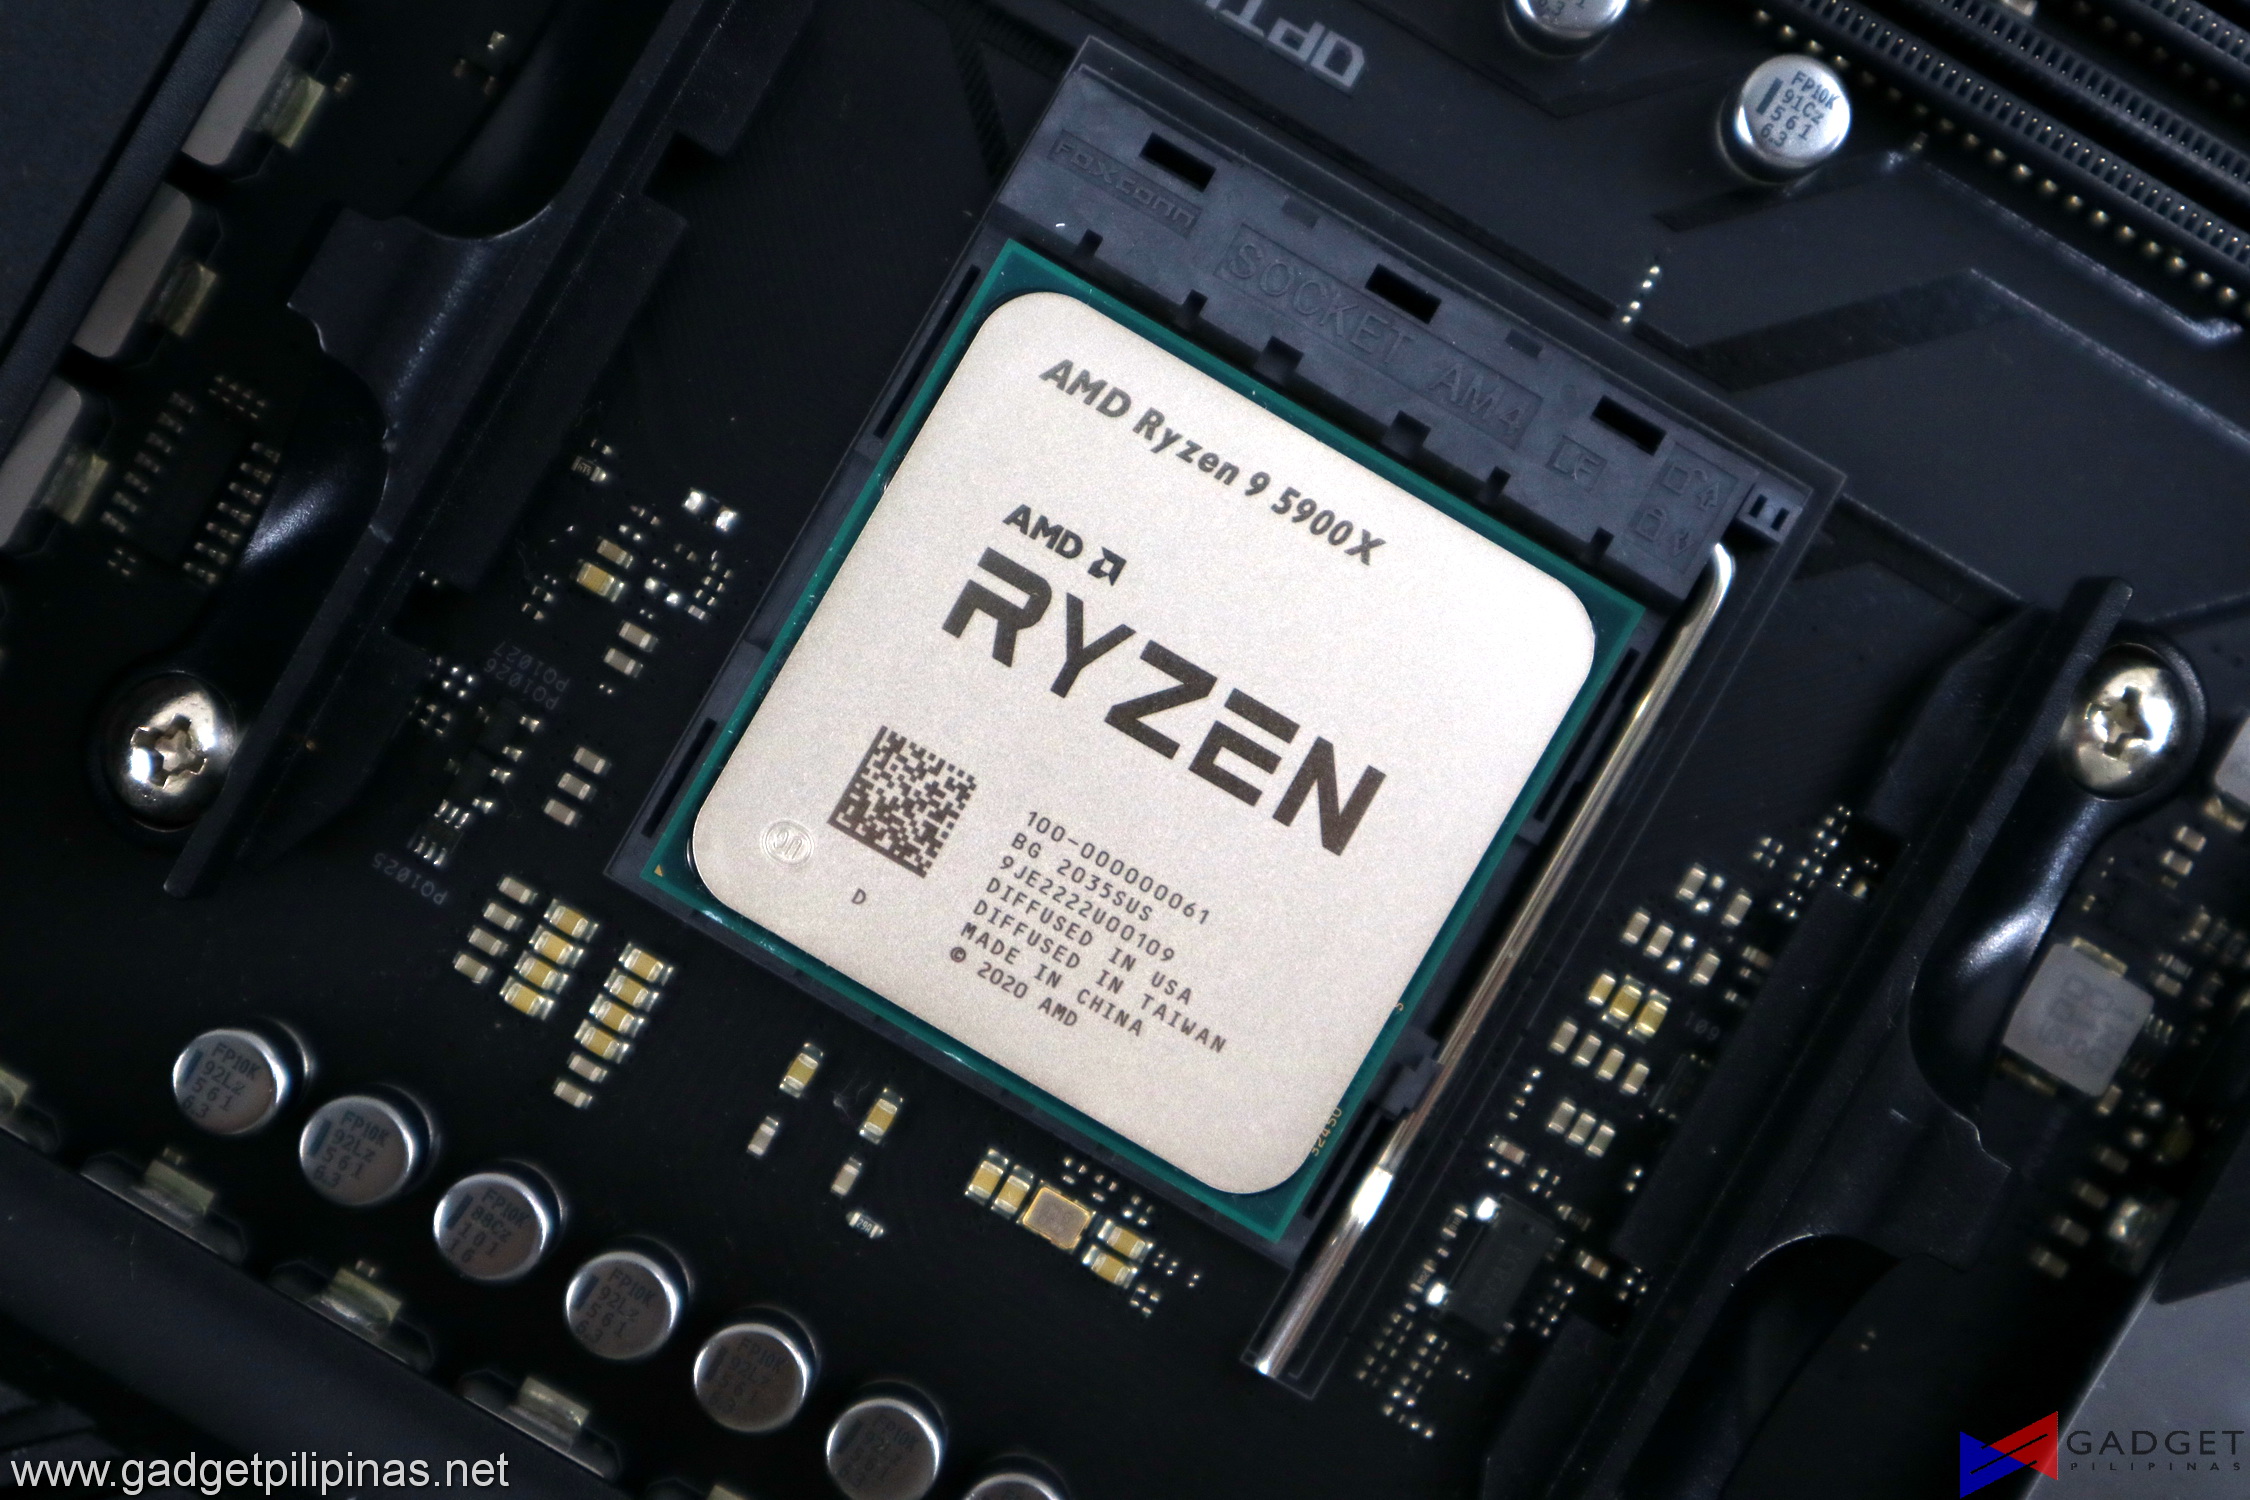 AMD Ryzen 9 5900X review